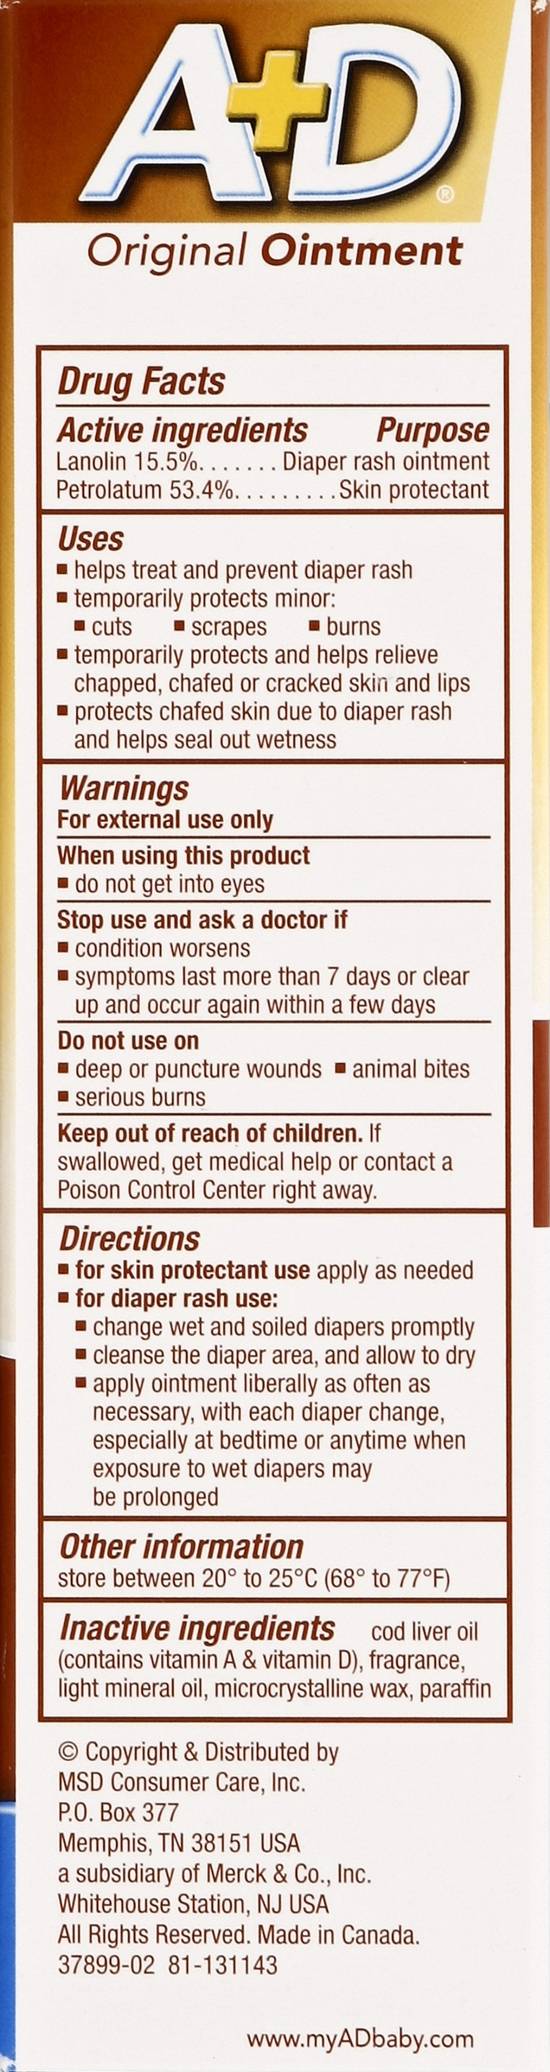 A+D Prevent Original Diaper Rash Ointment & Skin Protectant